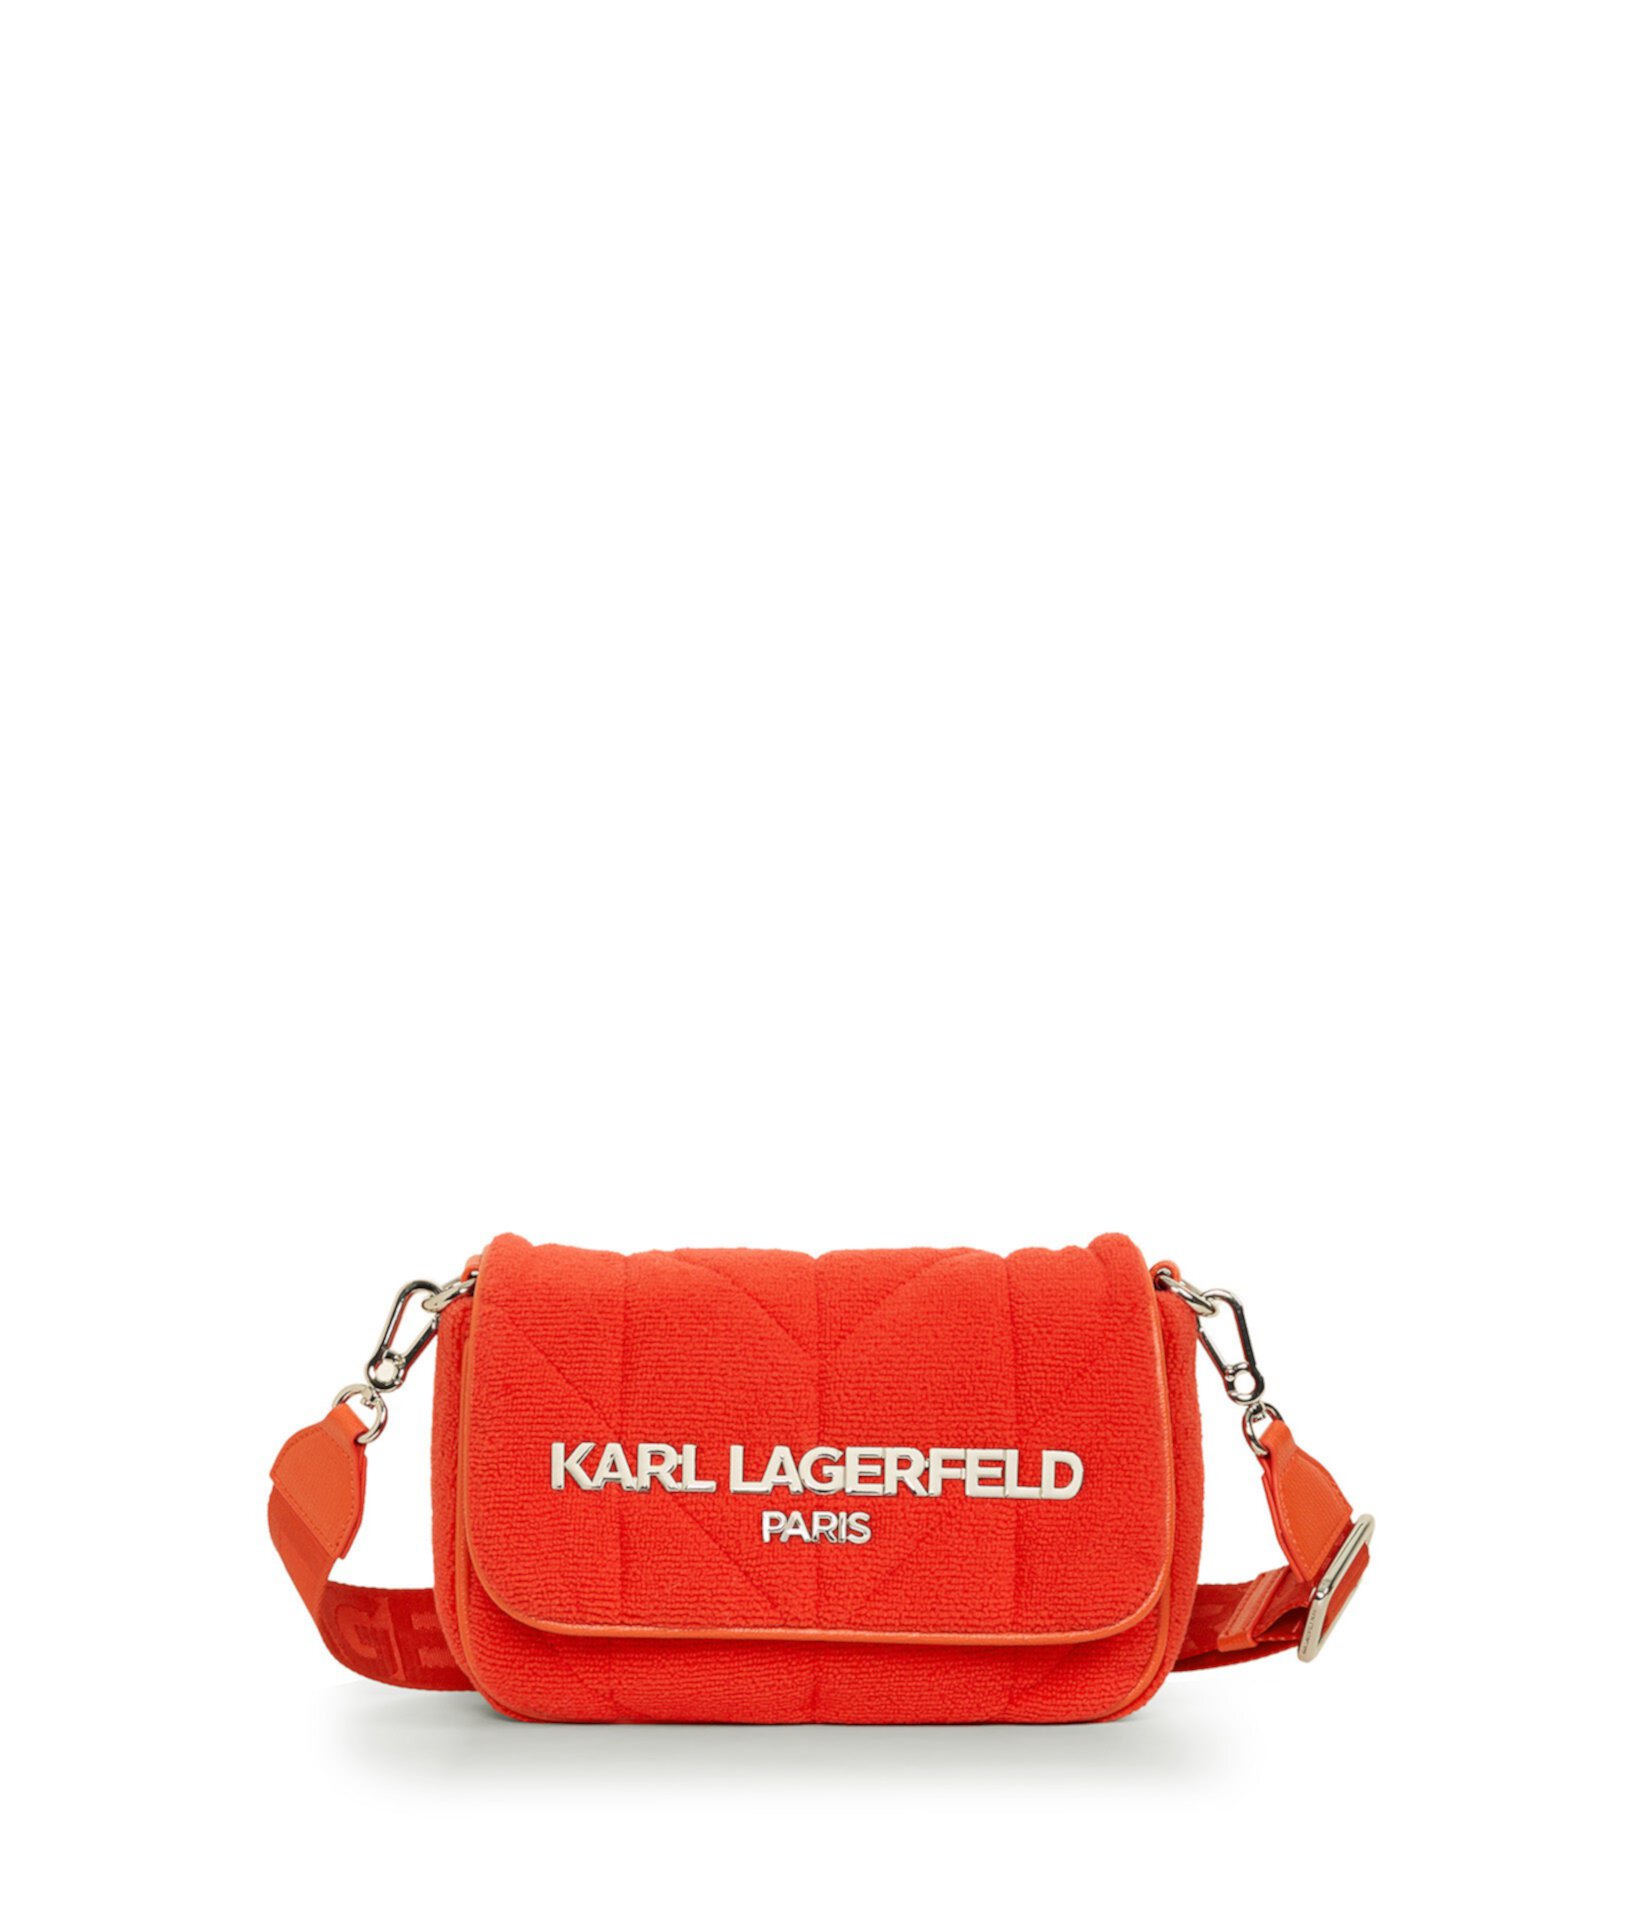 VOYAGE LOGO CROSSBODY Karl Lagerfeld Paris